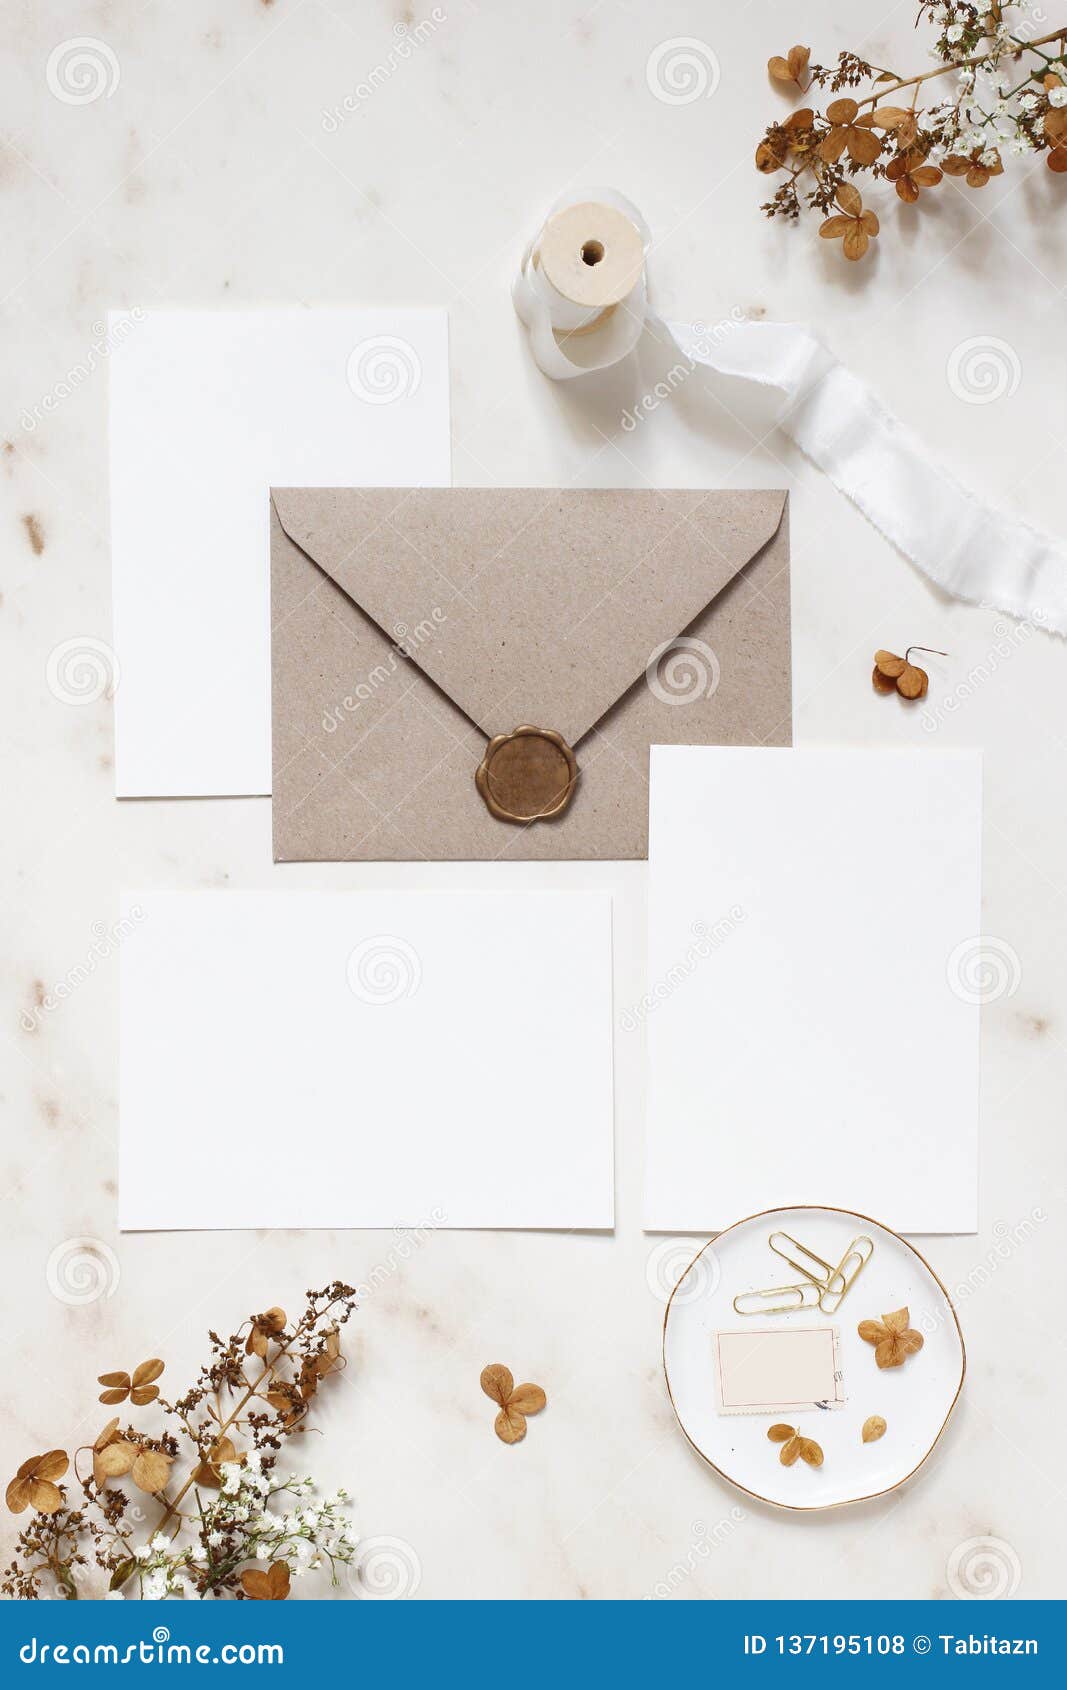 feminine winter wedding, birthday stationery mock-ups scene. blank greeting cards, envelope, wax seal, dry hydrangea and